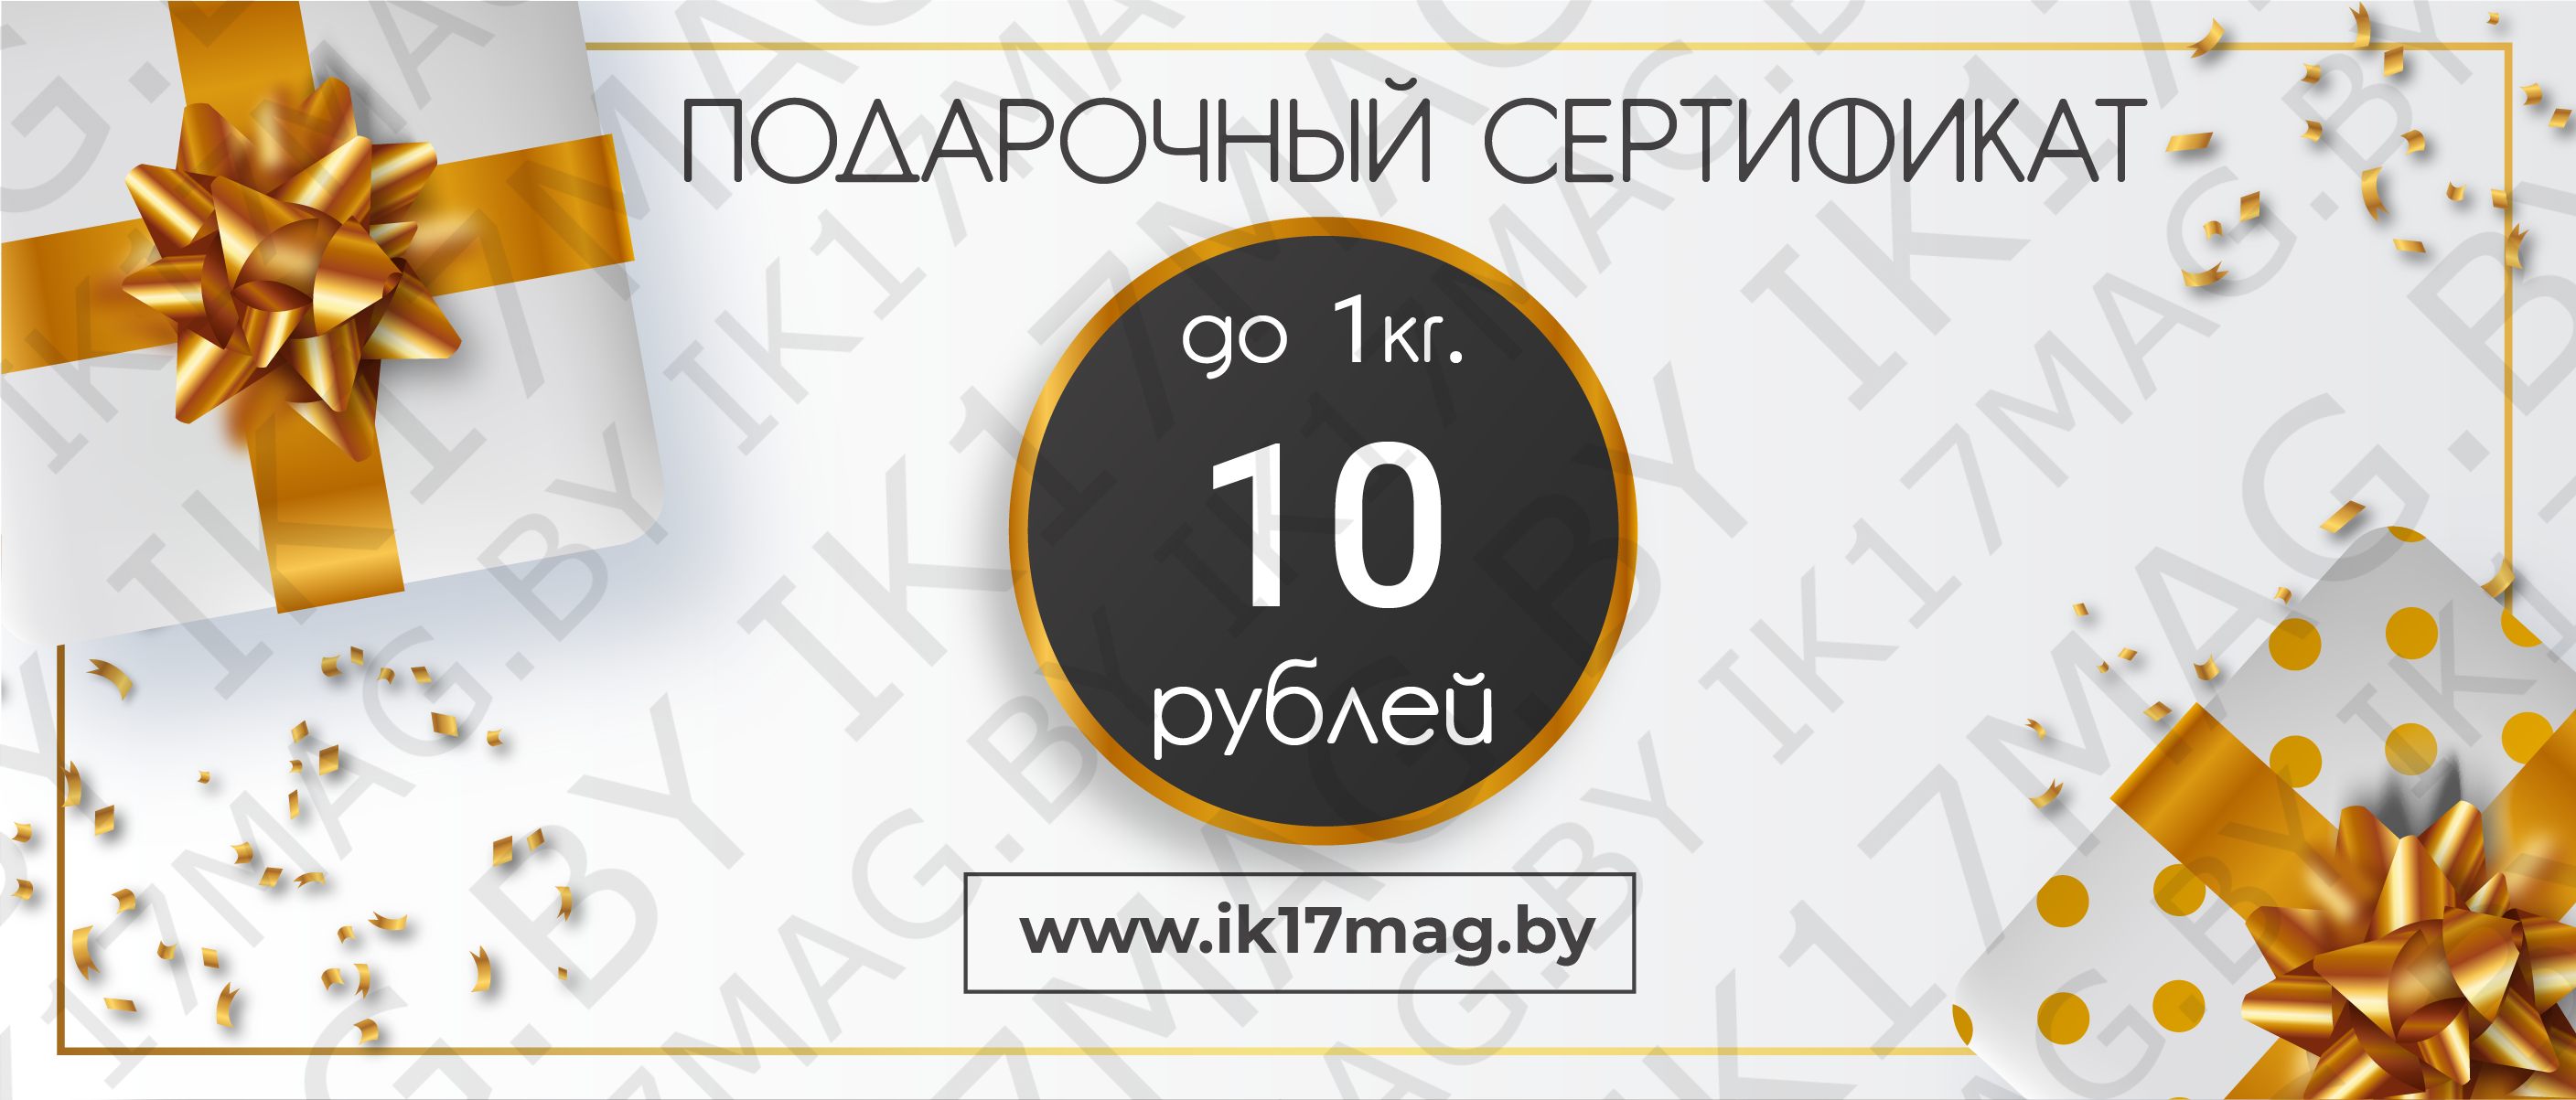 Сертификат на 10 рублей до 1 кг.